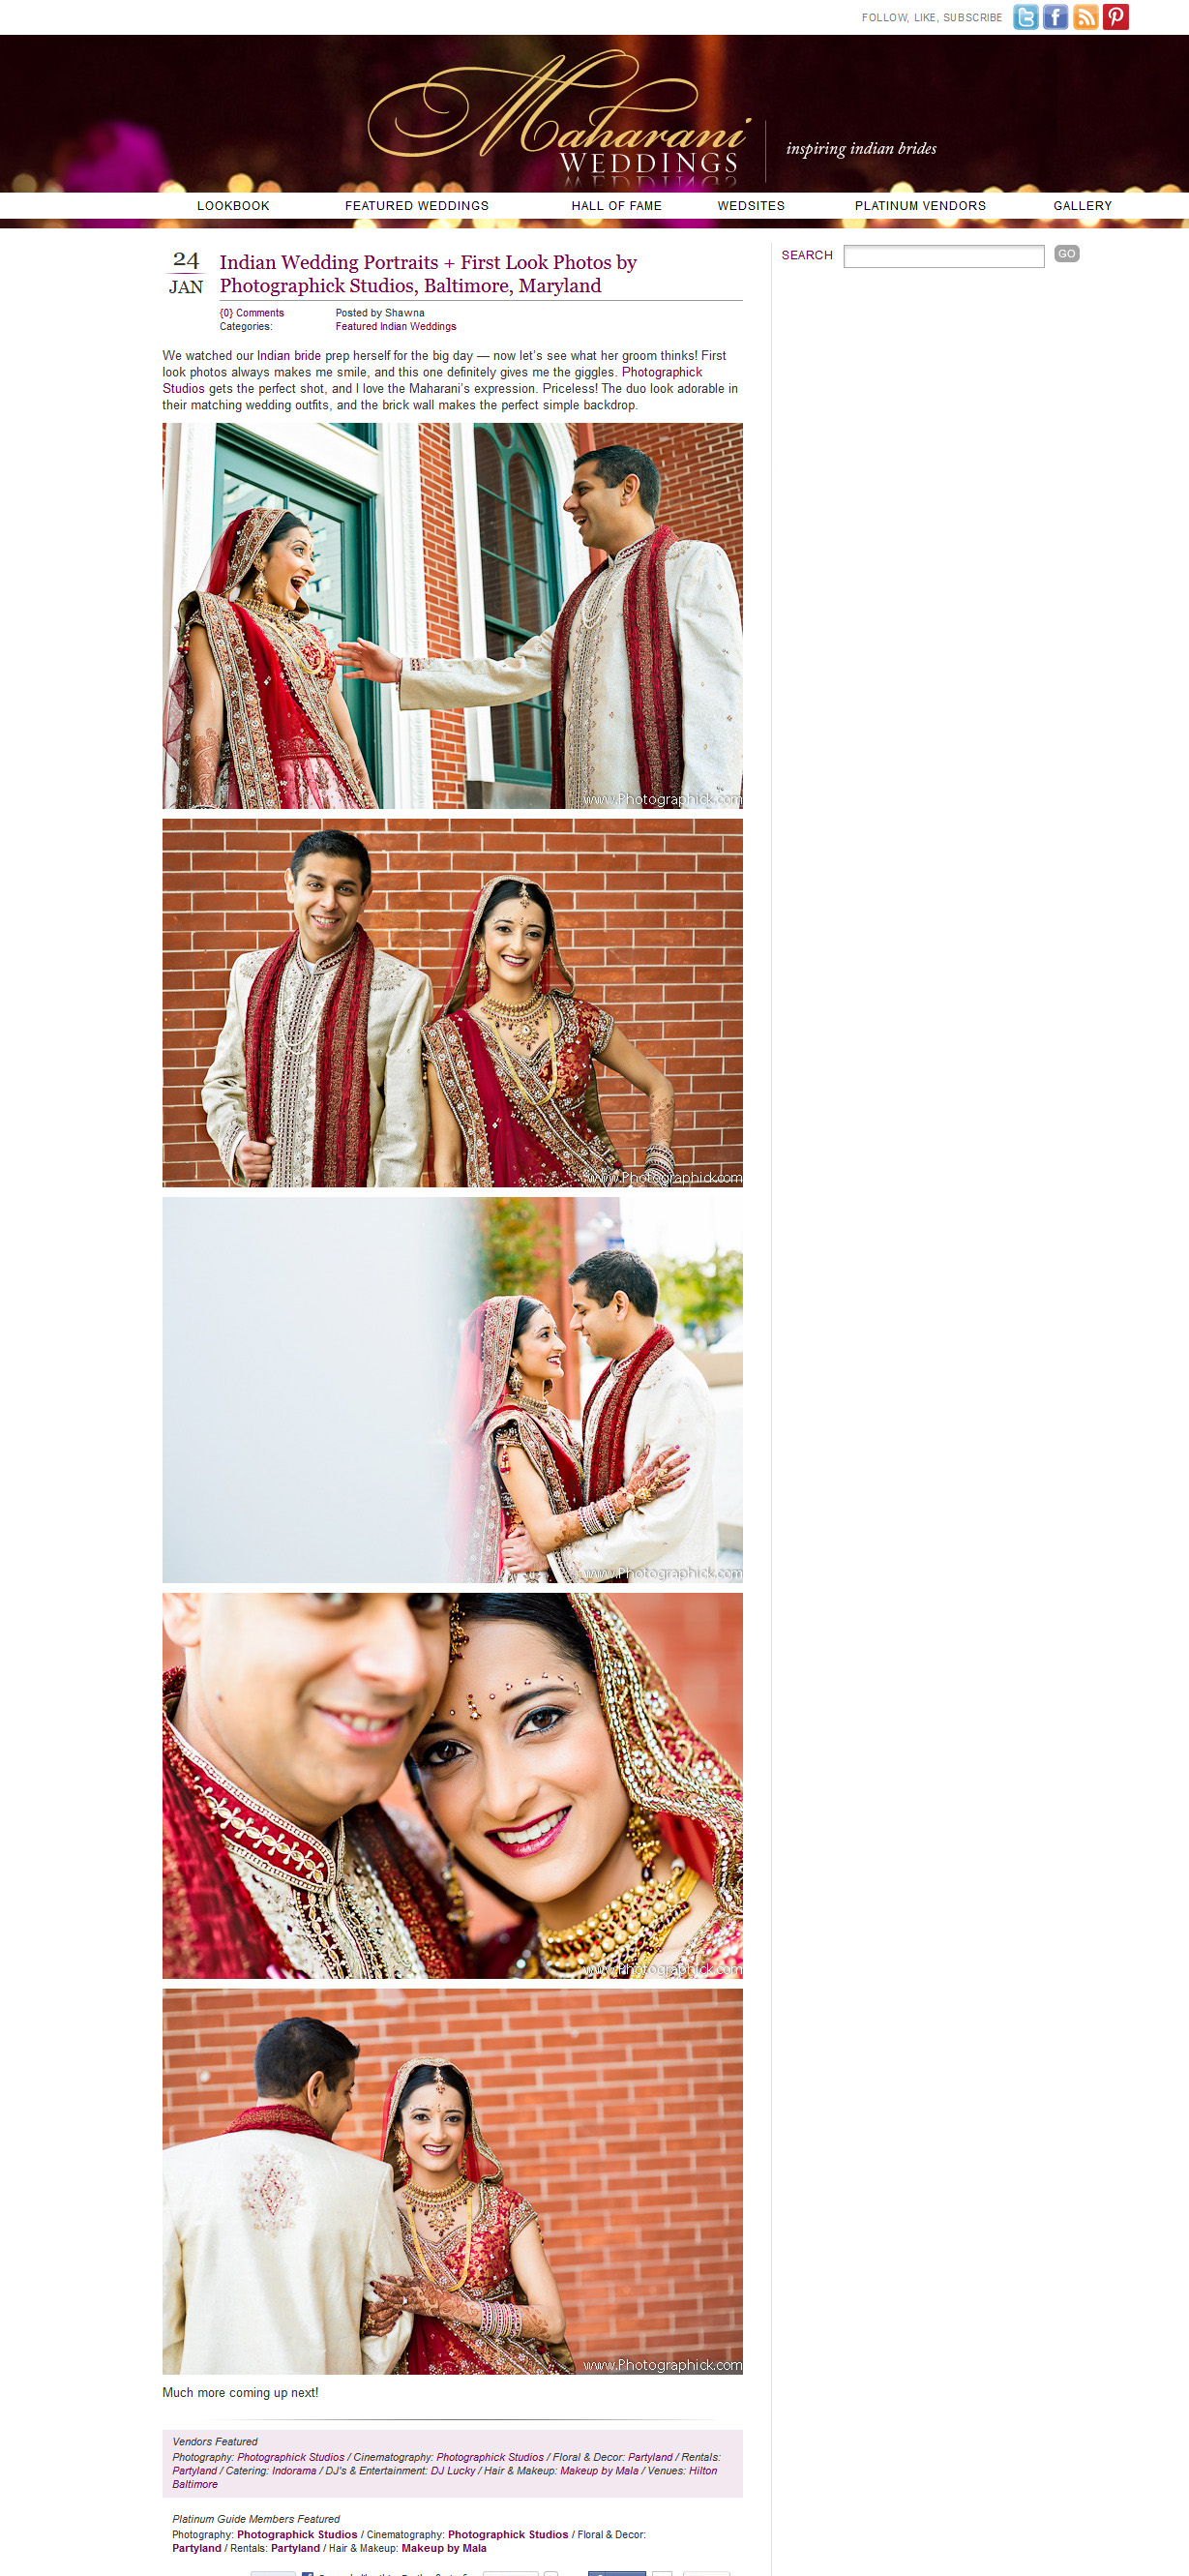 Reena and Aakash's Baltimore Indian Wedding published on Maharani Weddings